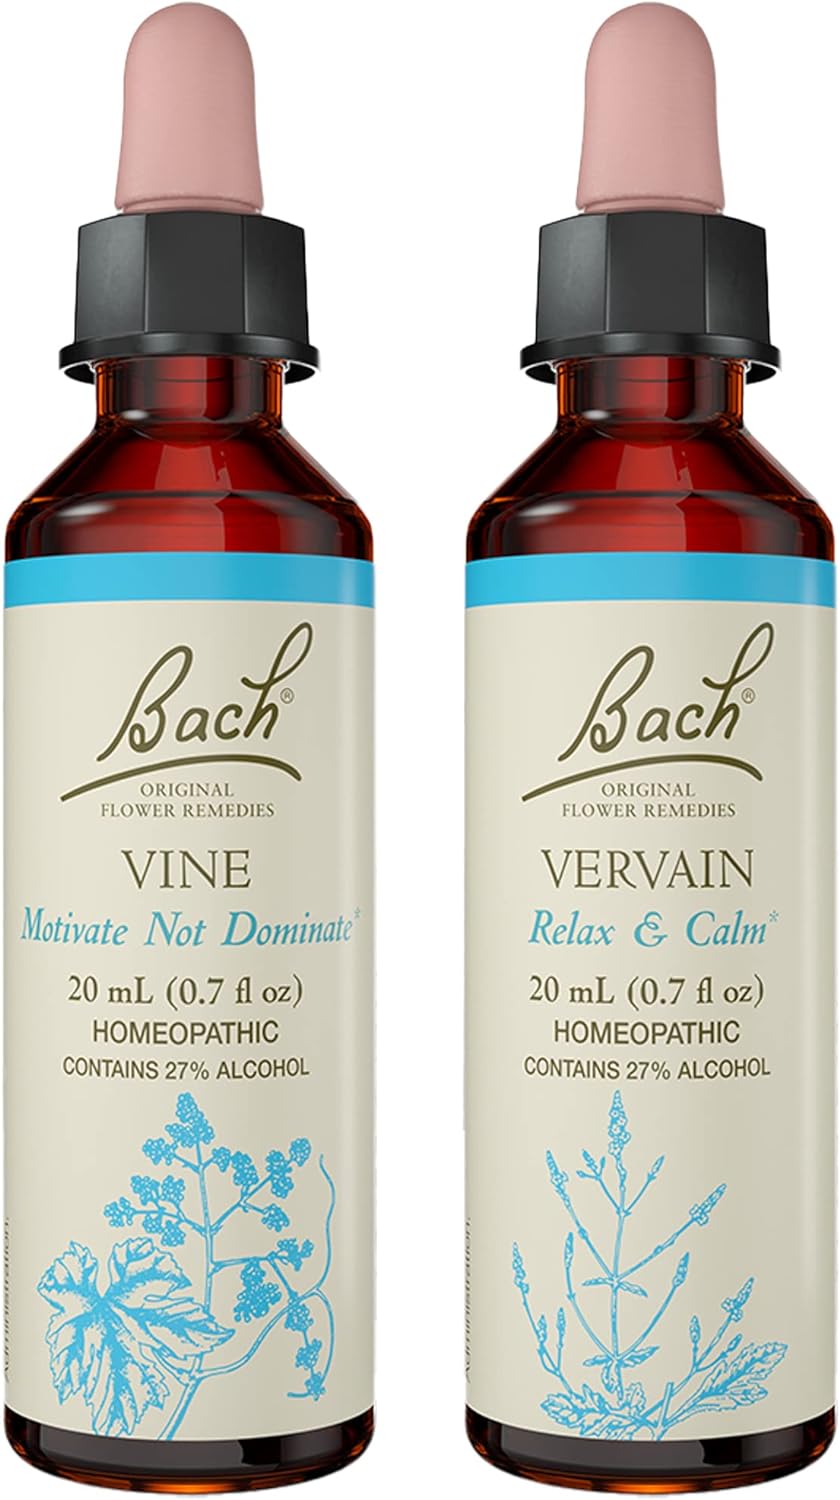 Bach Original Flower Remedies 2-Pack, Lead with Motivation" - Vine, Vervain, Homeopathic Flower Essences, Vegan, 20mL Dropper x2